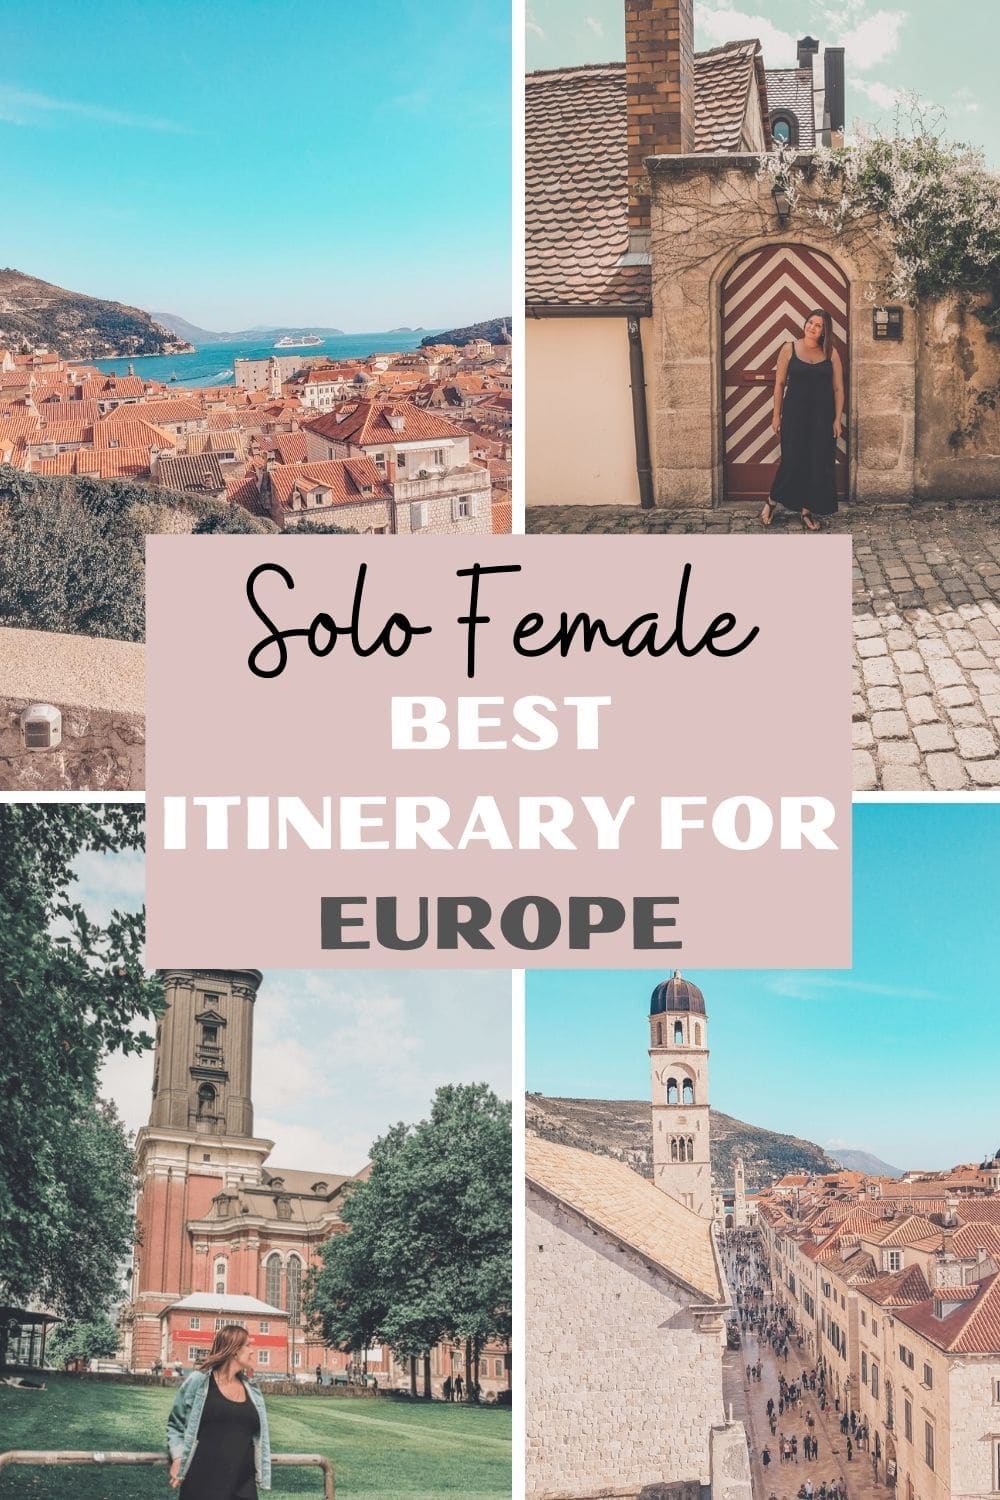 Best solo travel destinations for women